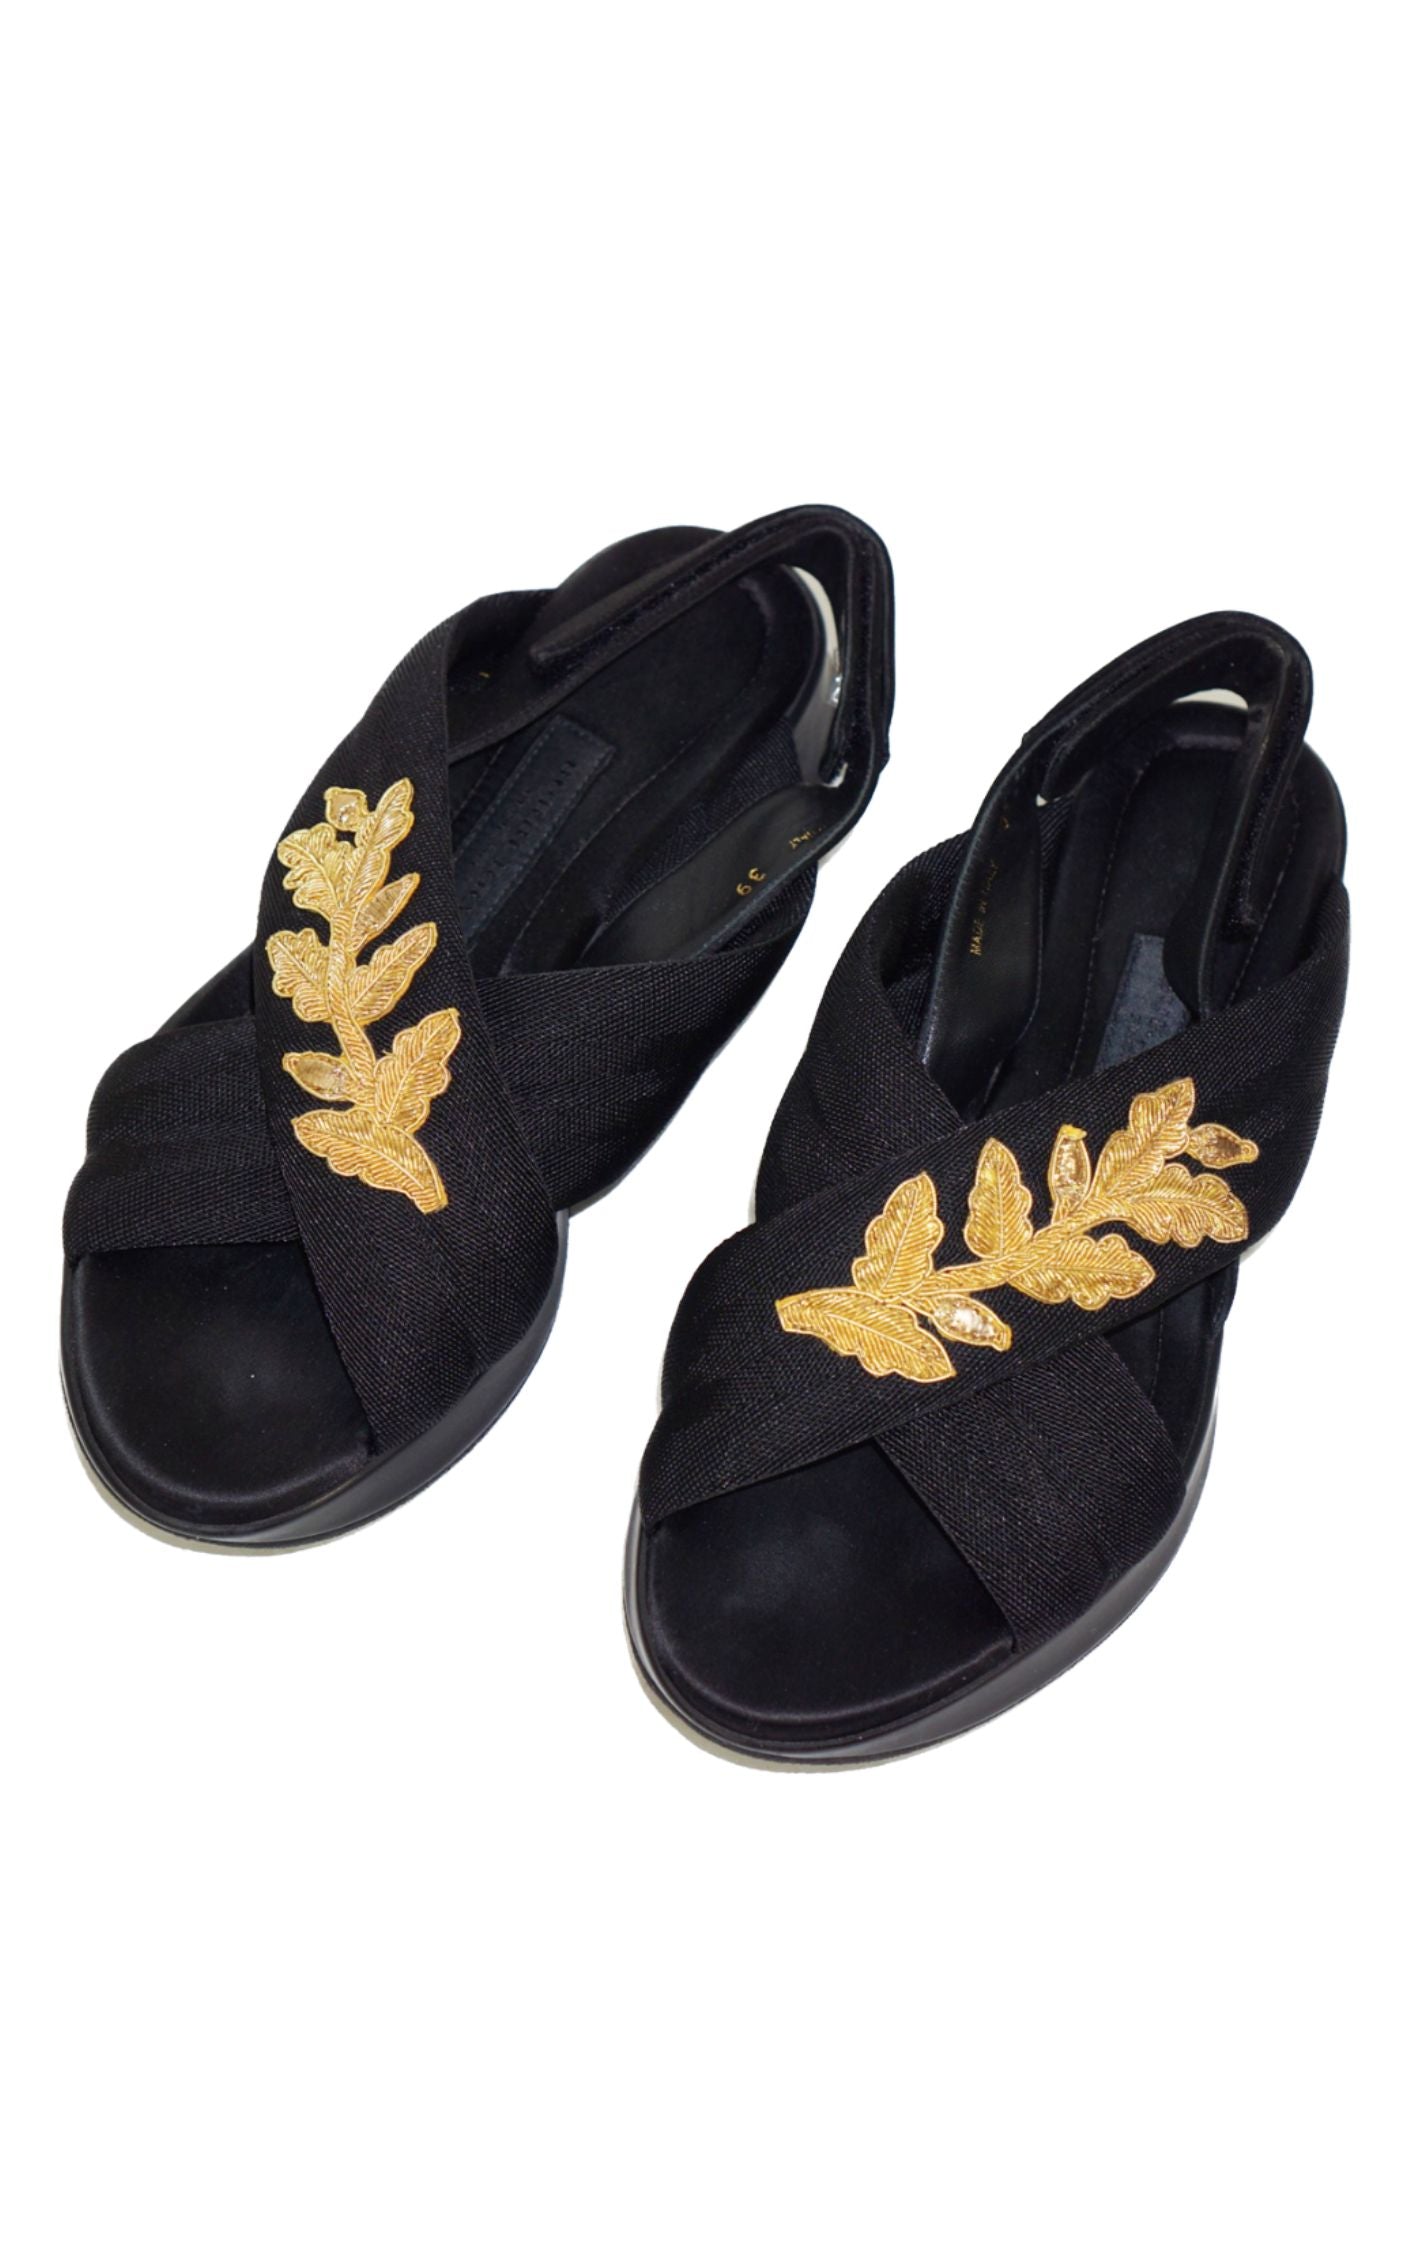 BURBERRY Prorsum Criss Cross Gold Leaf Sandals resellum